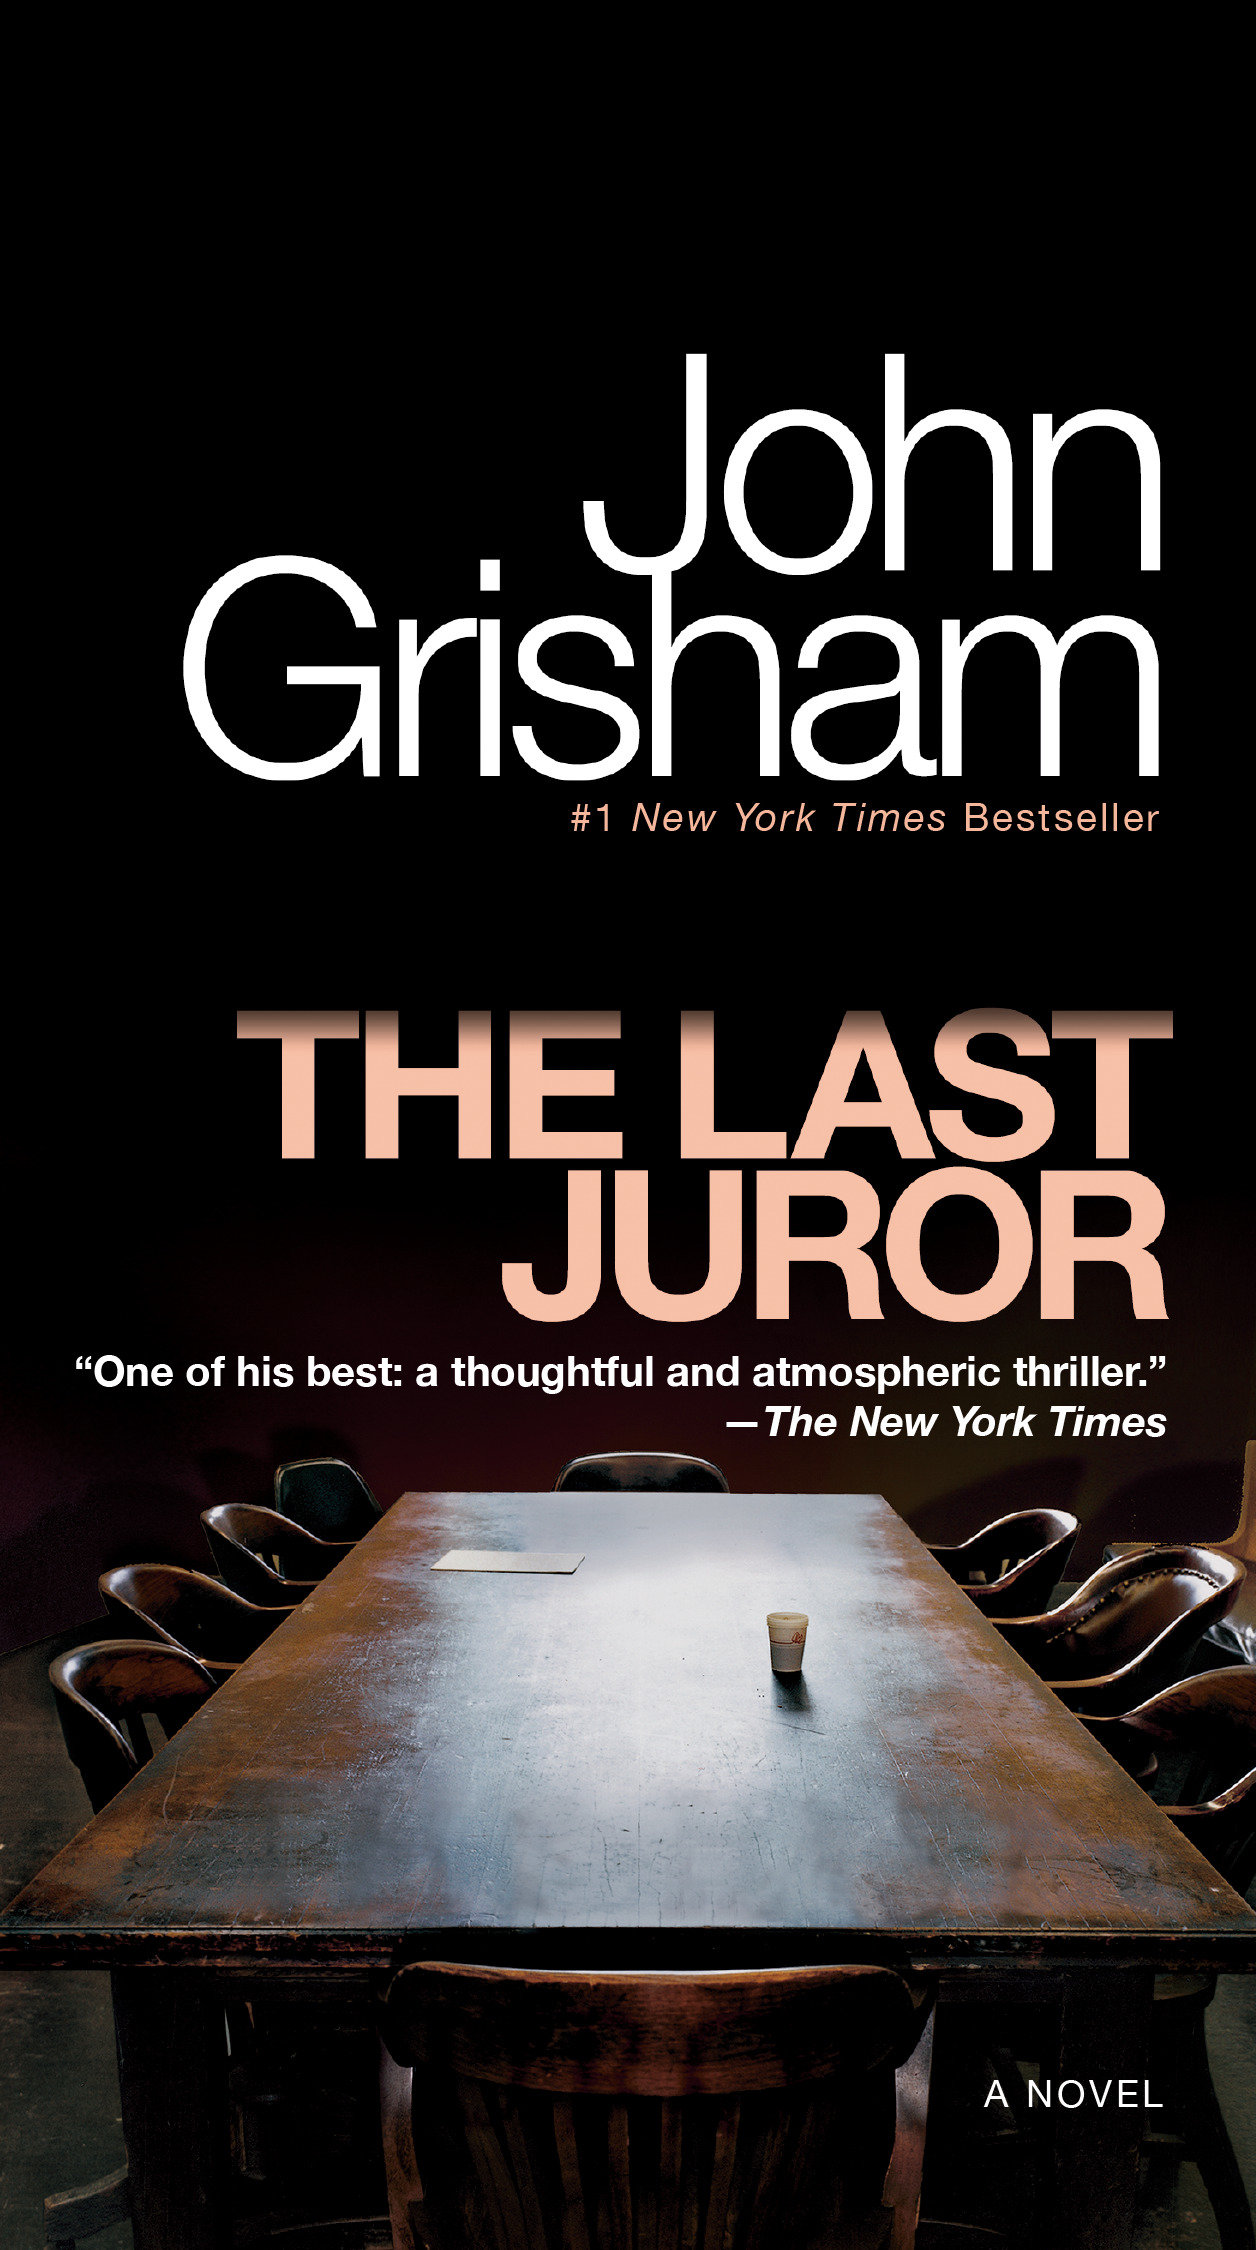 The last juror cover image